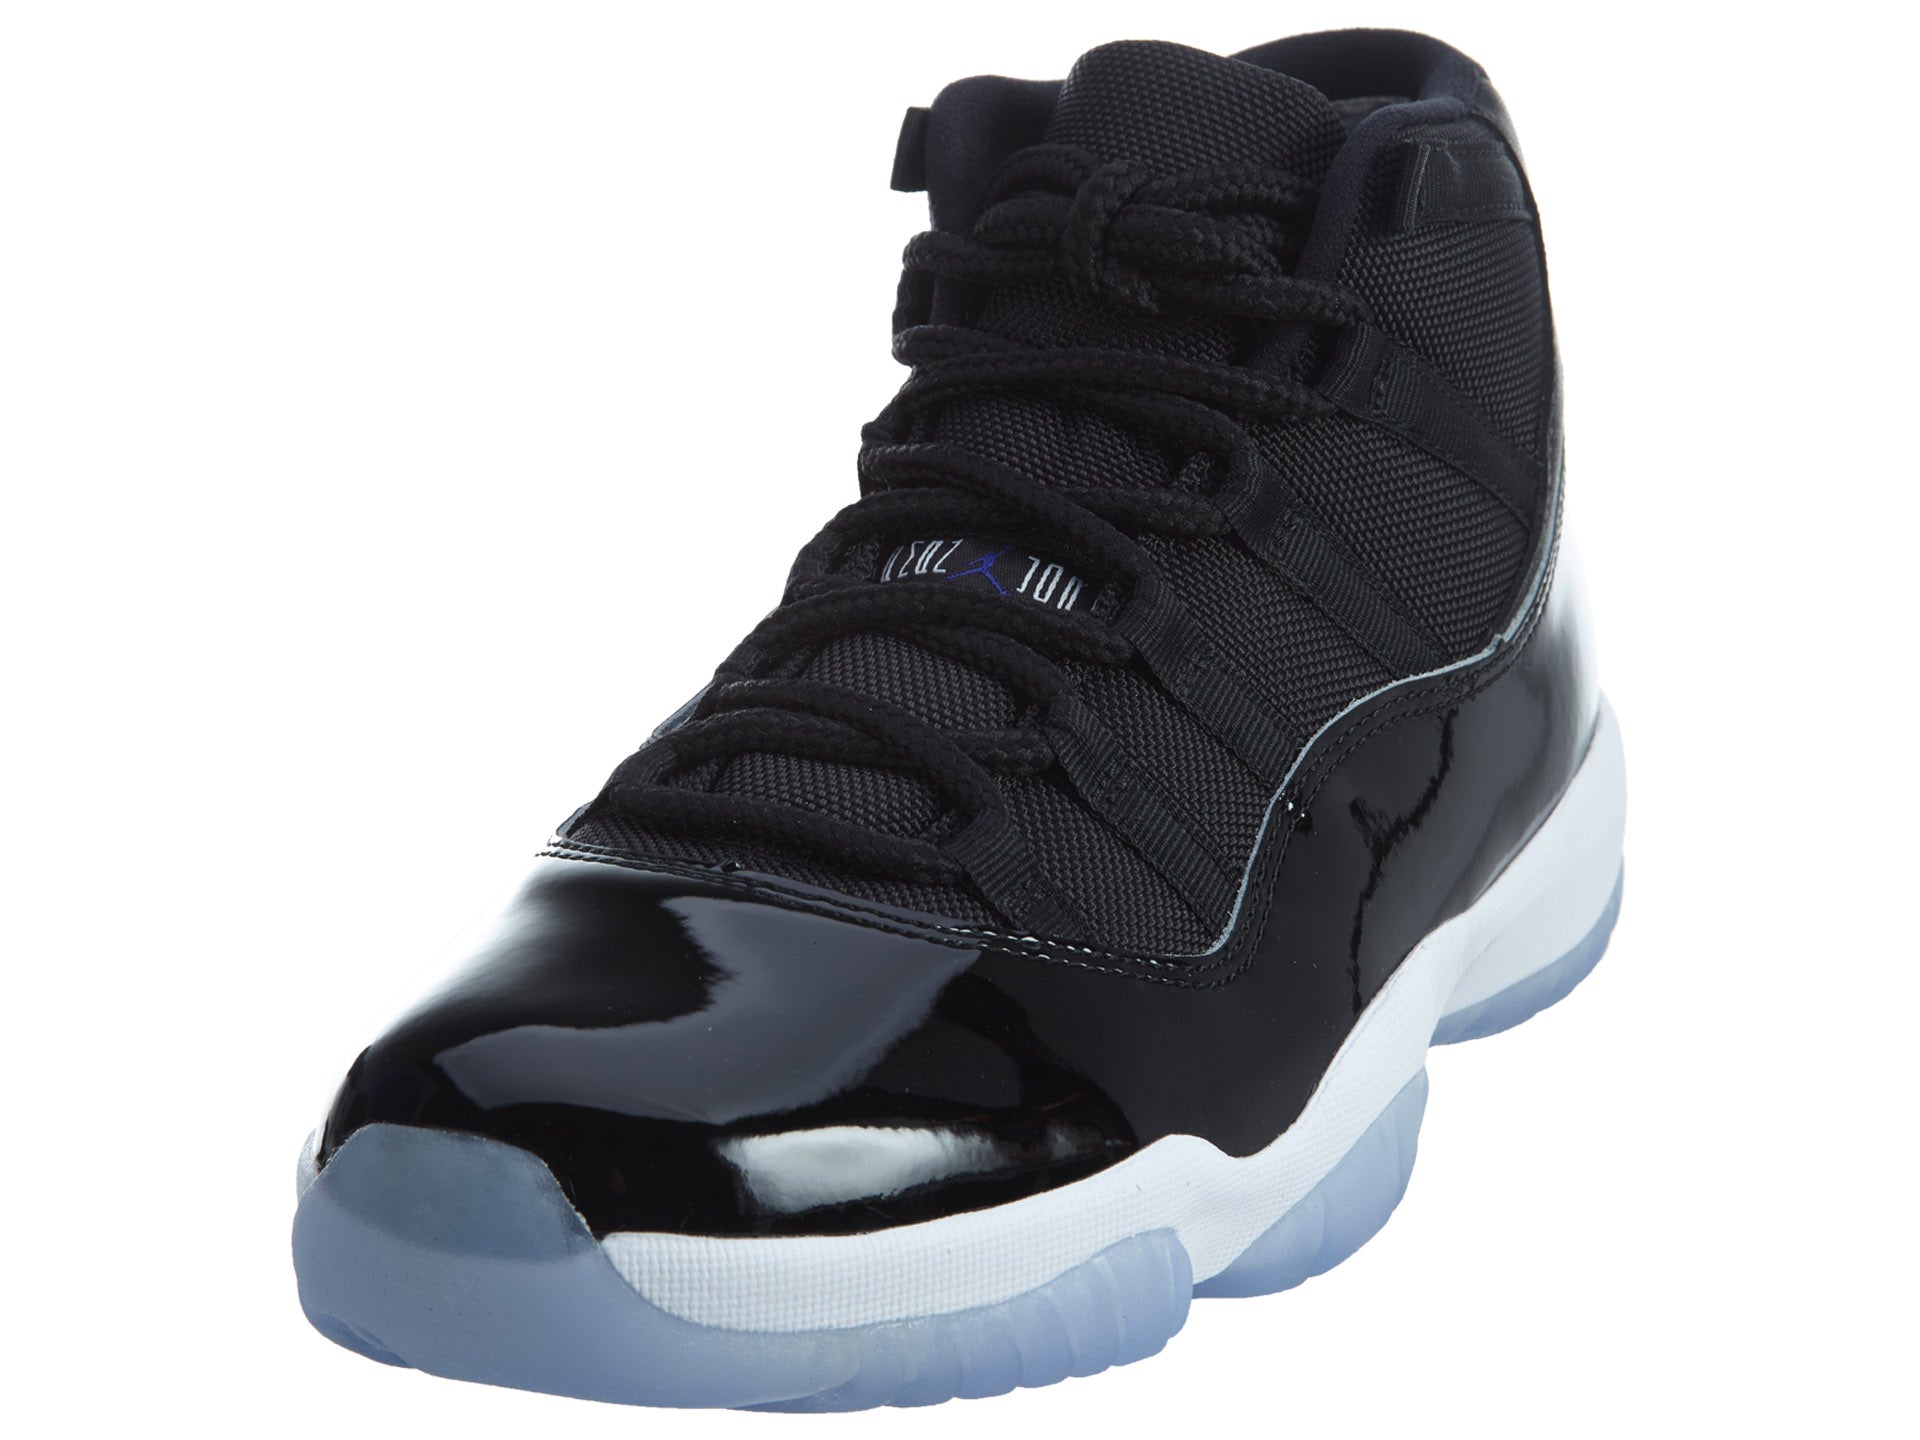 AIR Jordan 11 Retro Basketball Shoes Men's Style #378037-003